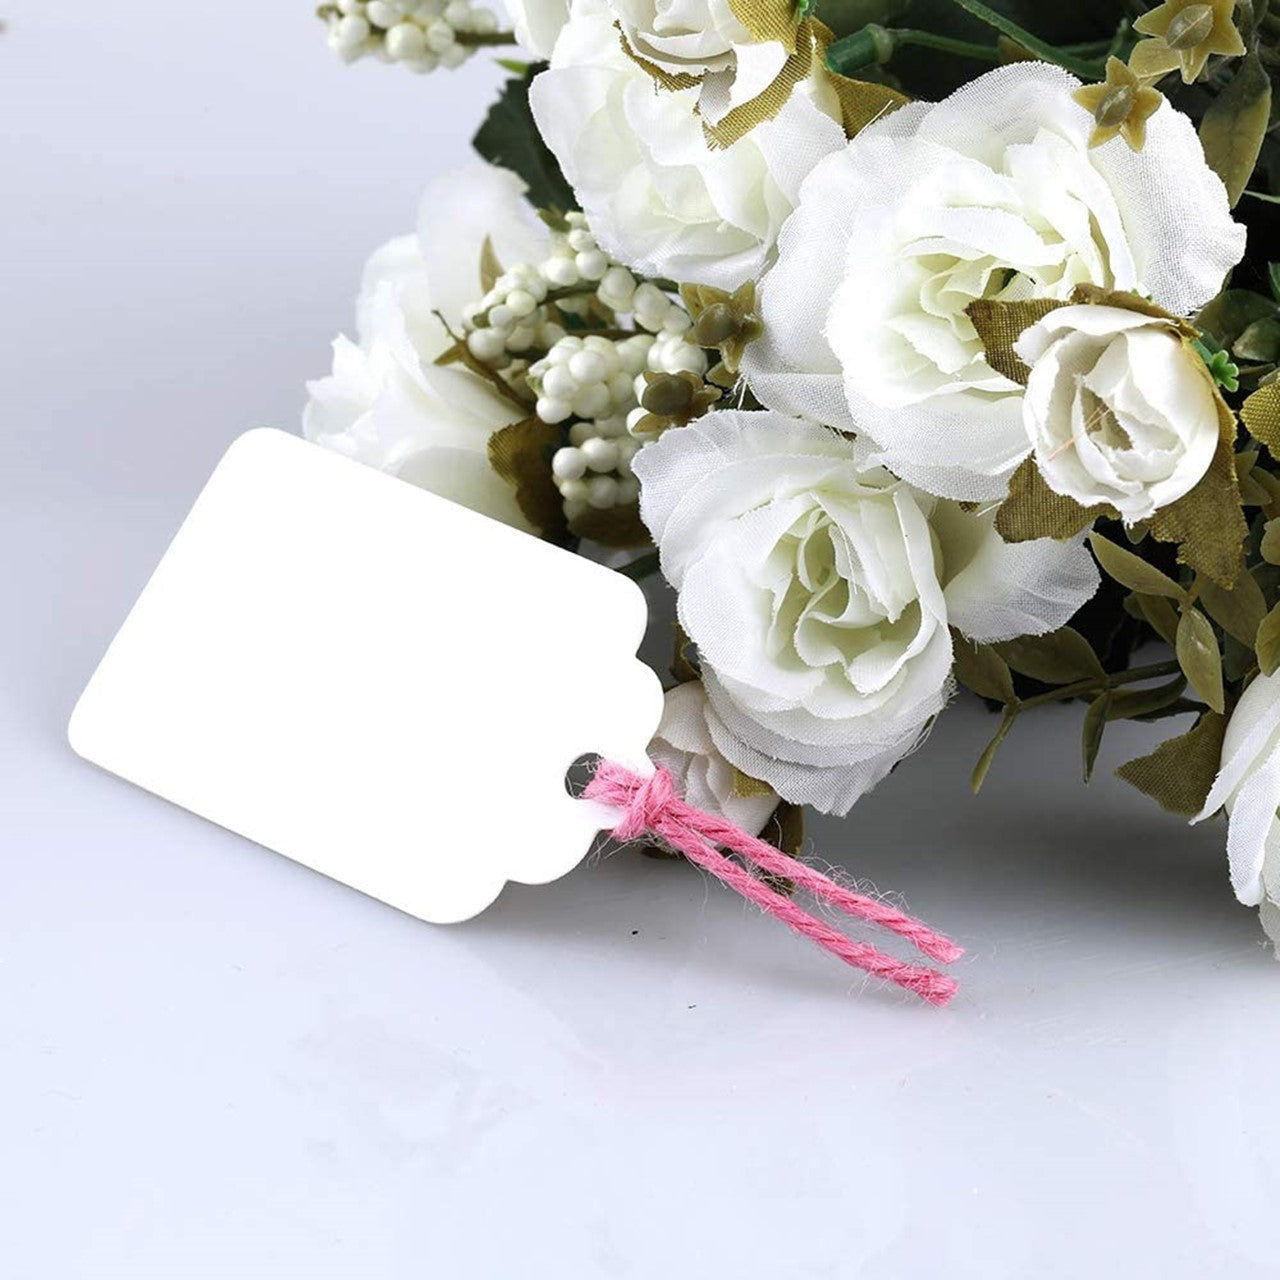 ecofynd Single String Baby Pink Color Jute Cord Craft supplies freeshipping - Ecofynd